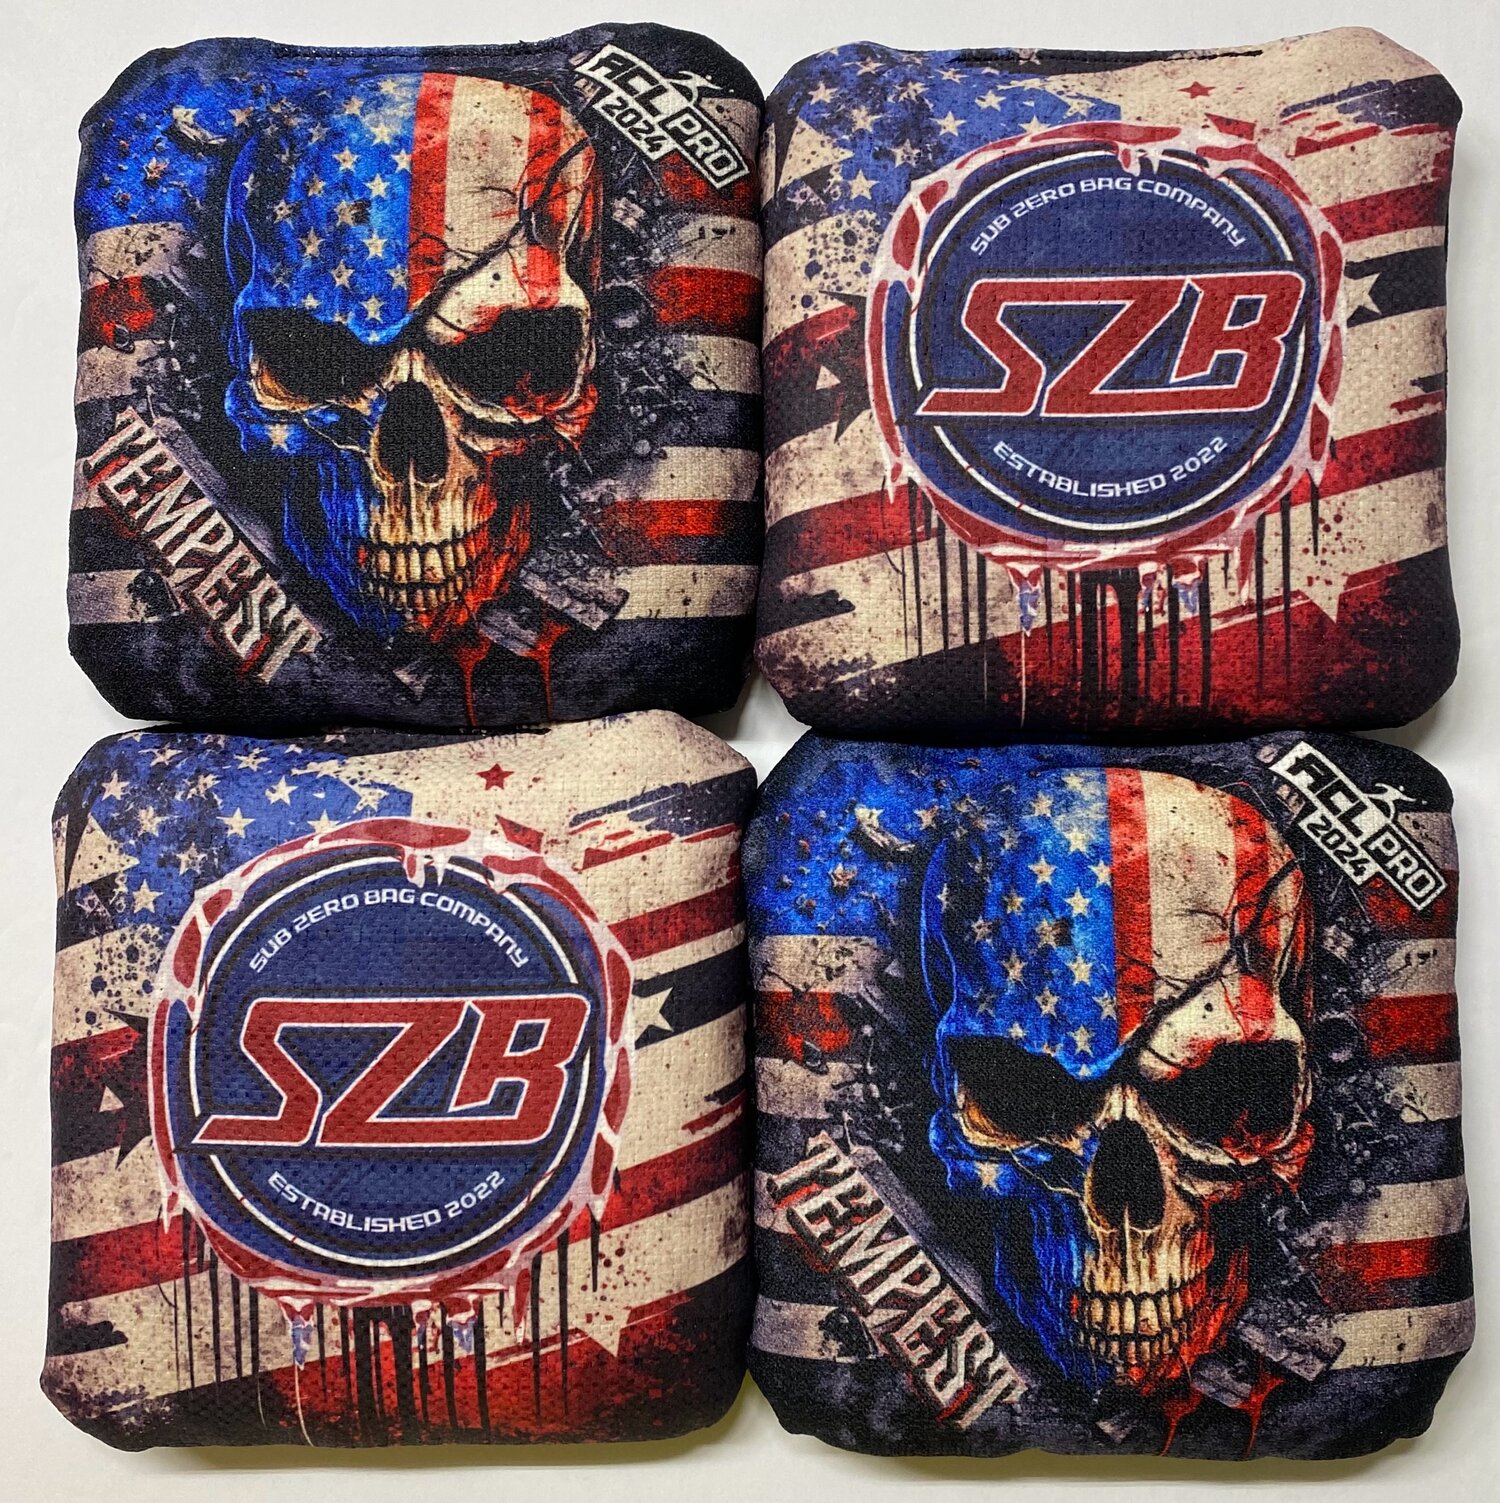 American Skull (All Bag Lines) — Sub Zero Bag Co